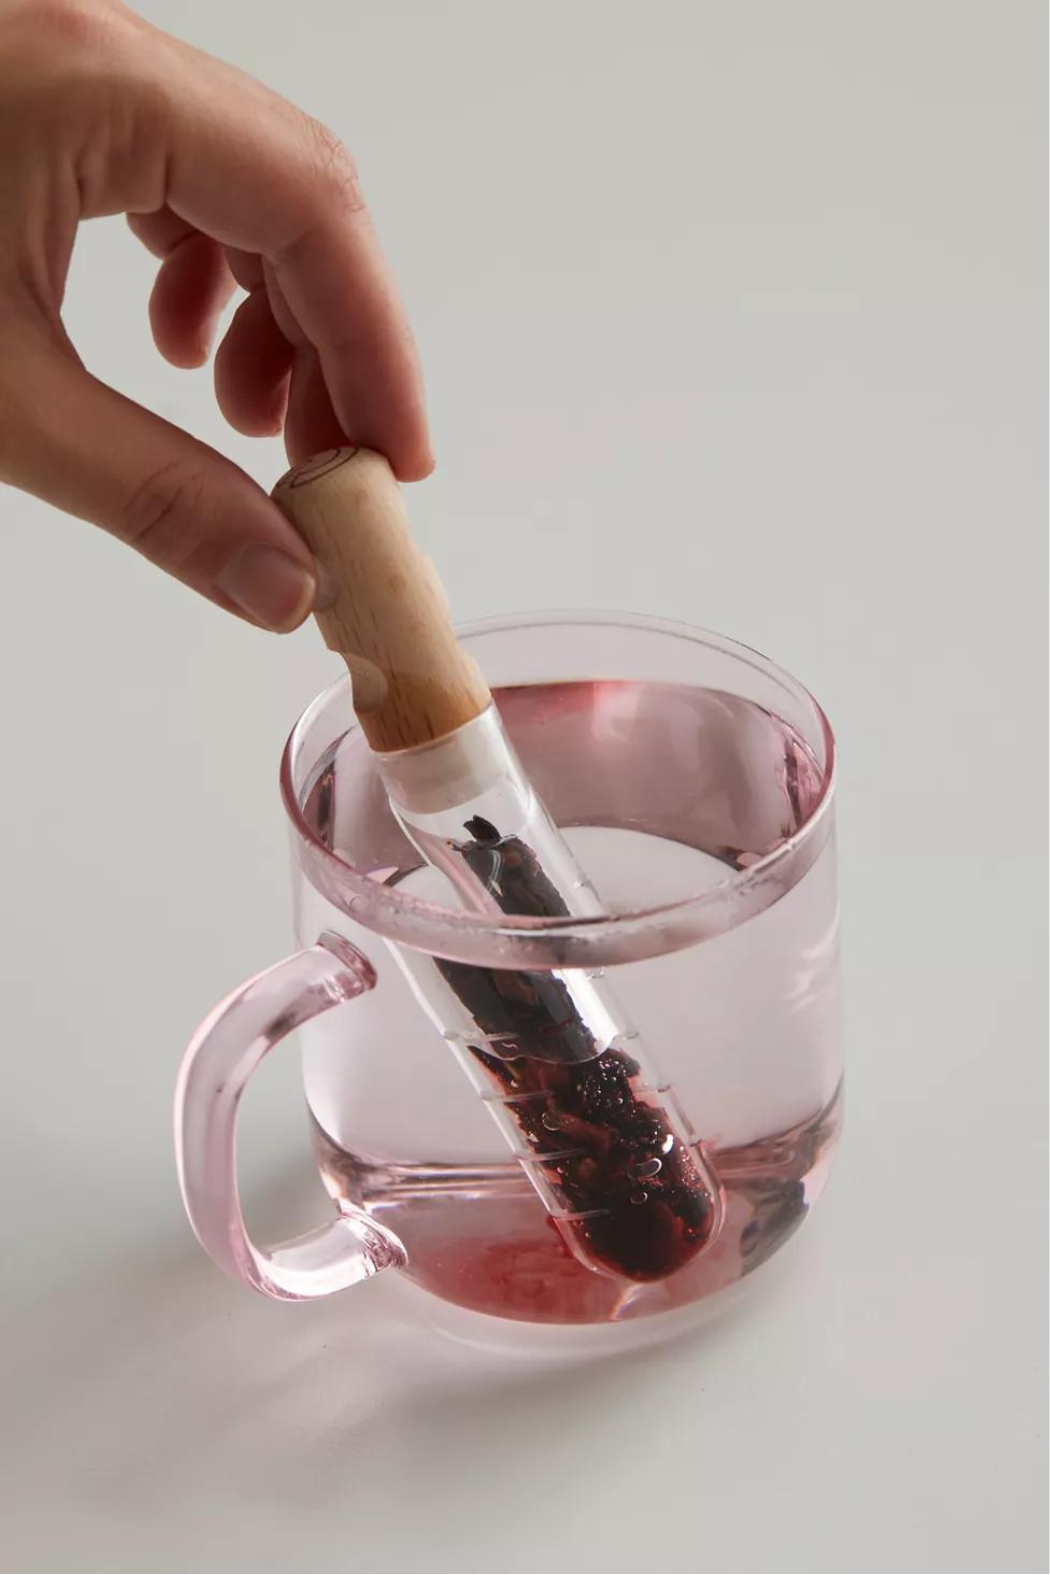 Good Citizen Coffee- 2-in-1 Ceramic Tea Infuser Mug